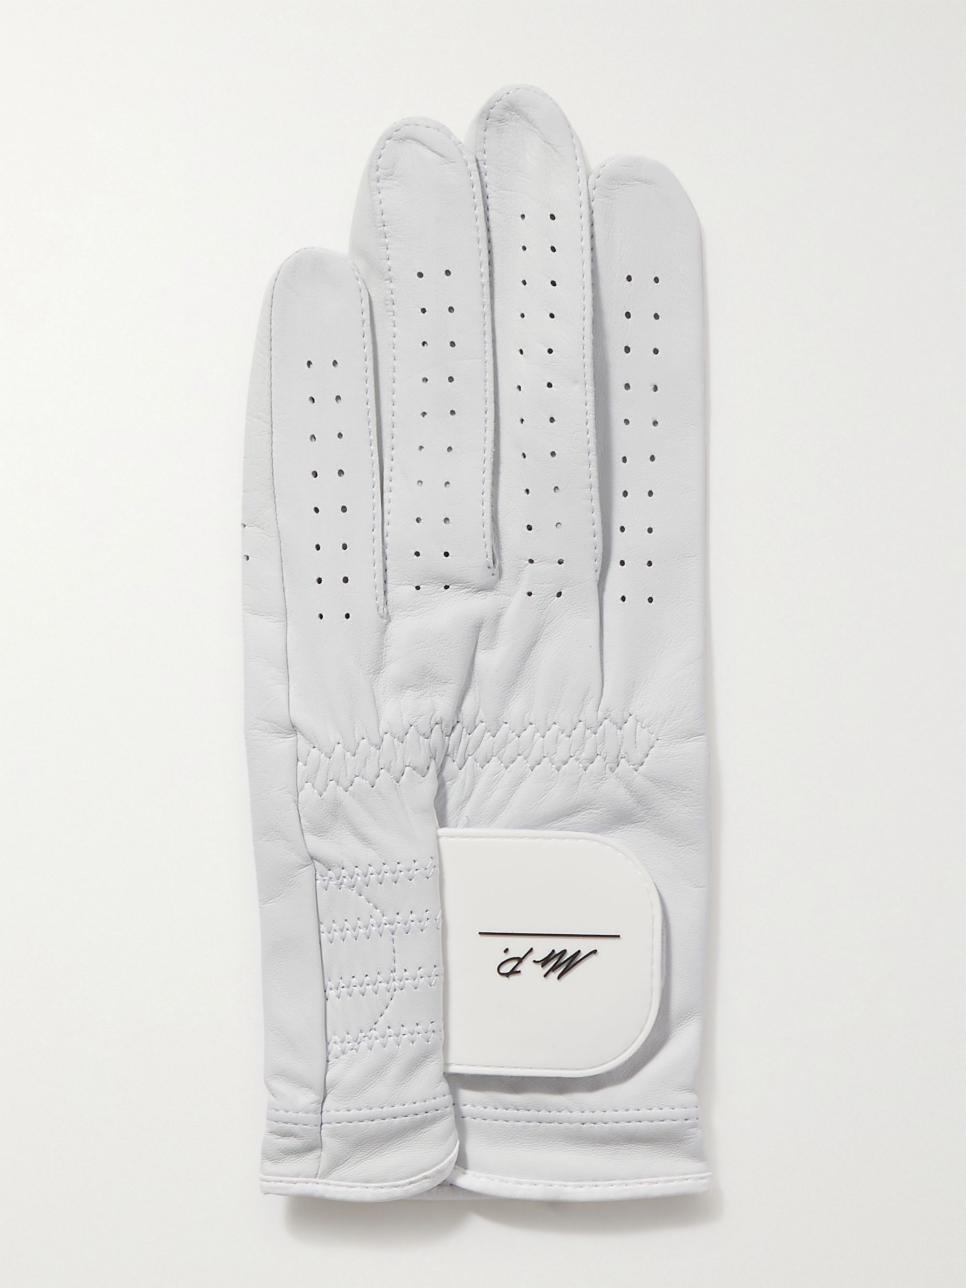 rx-mrportermr-p-logo-detailed-perforated-leather-golf-glove.jpeg